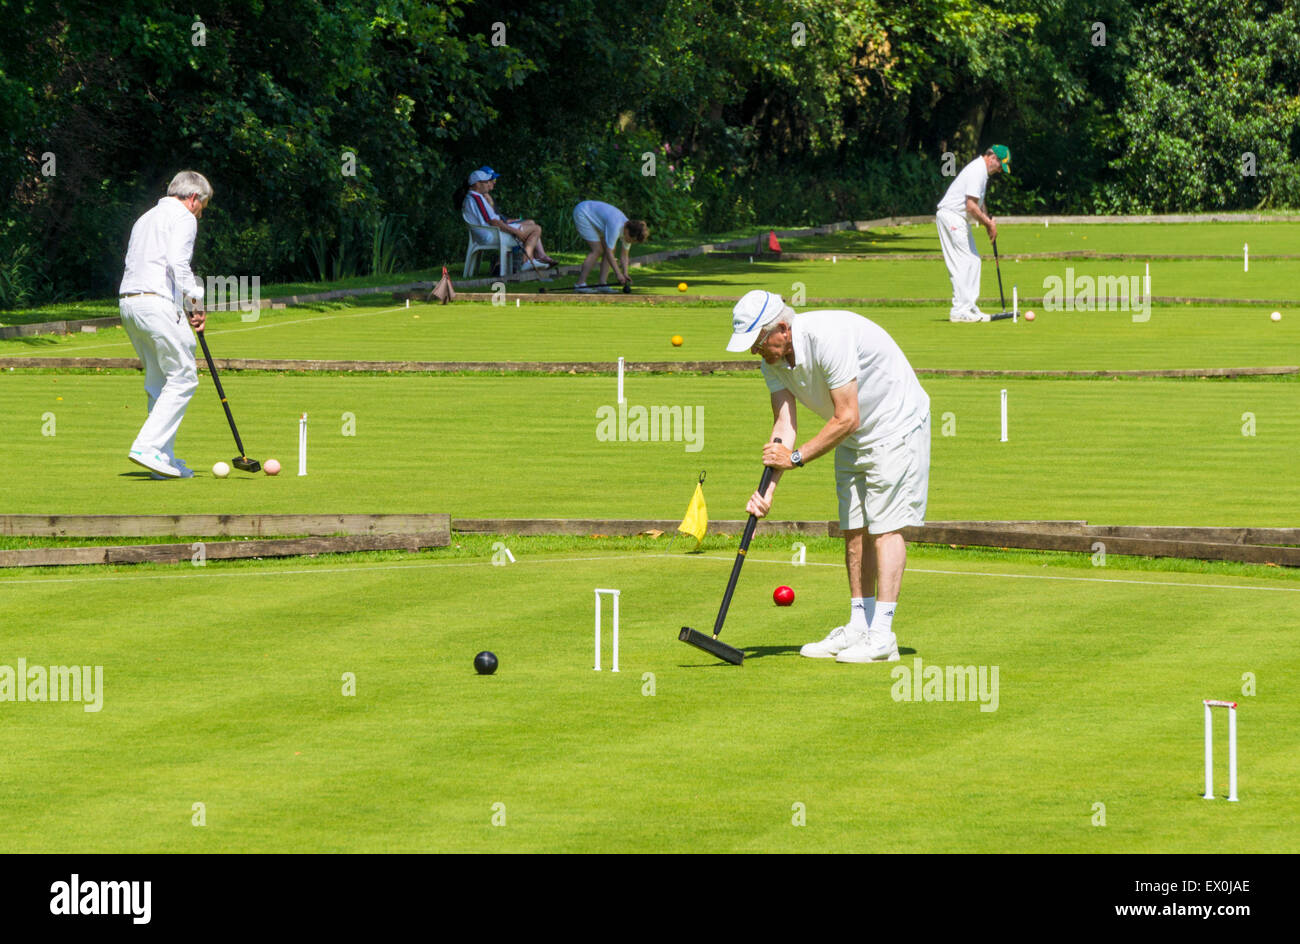 Croquet Playing at Highfields Park Nottingham Nottinghamshire England UK GB EU Europe Stock Photo